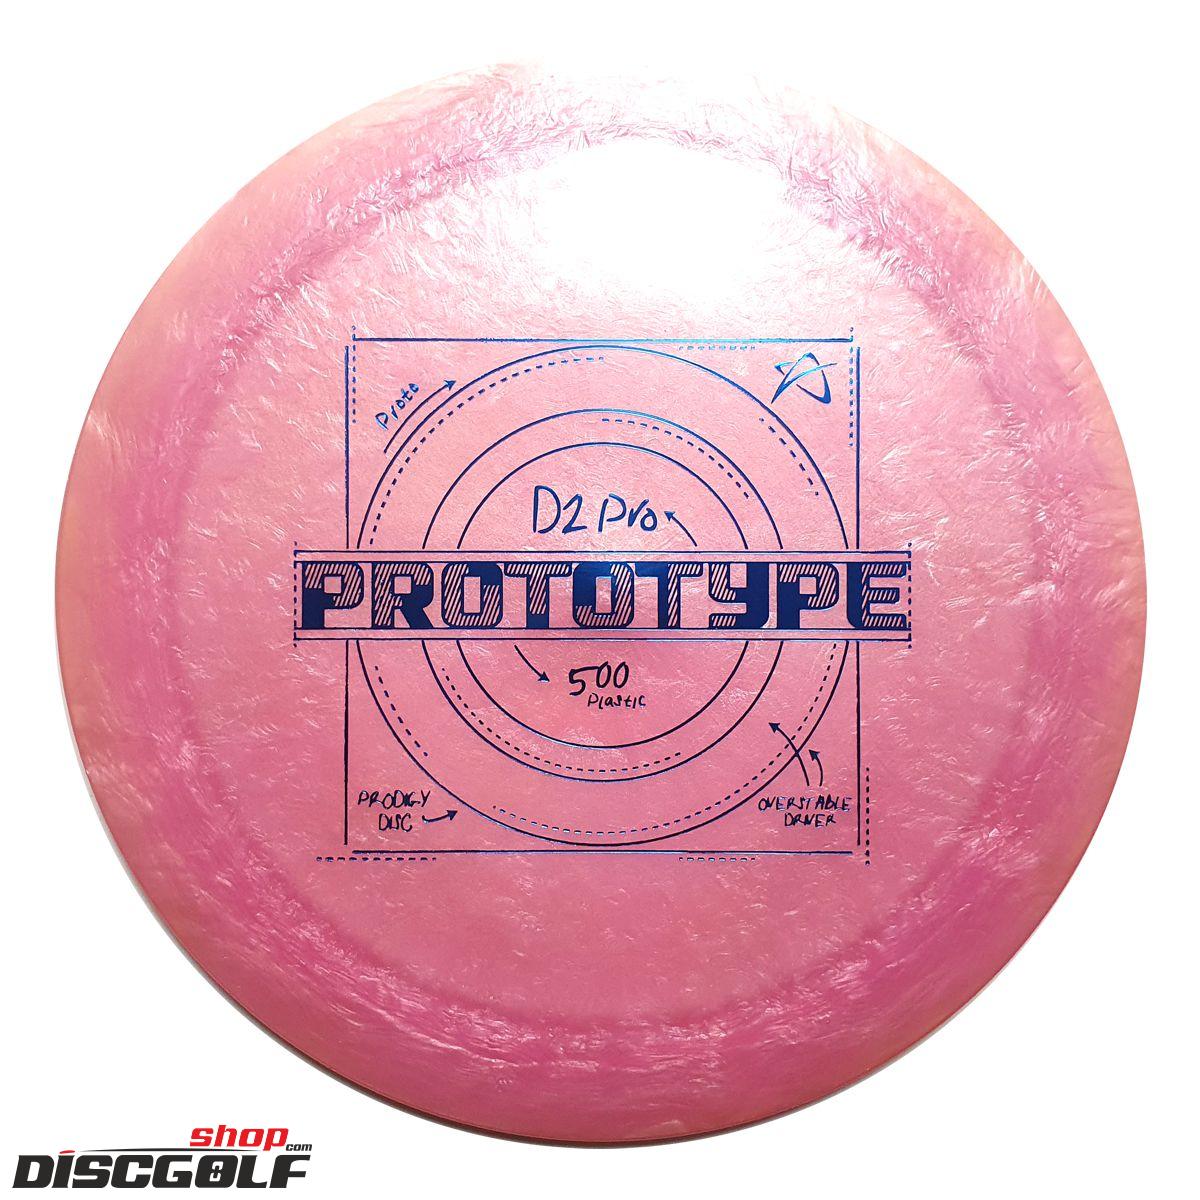 Prodigy D2 PRO 500 Prototype (discgolf)